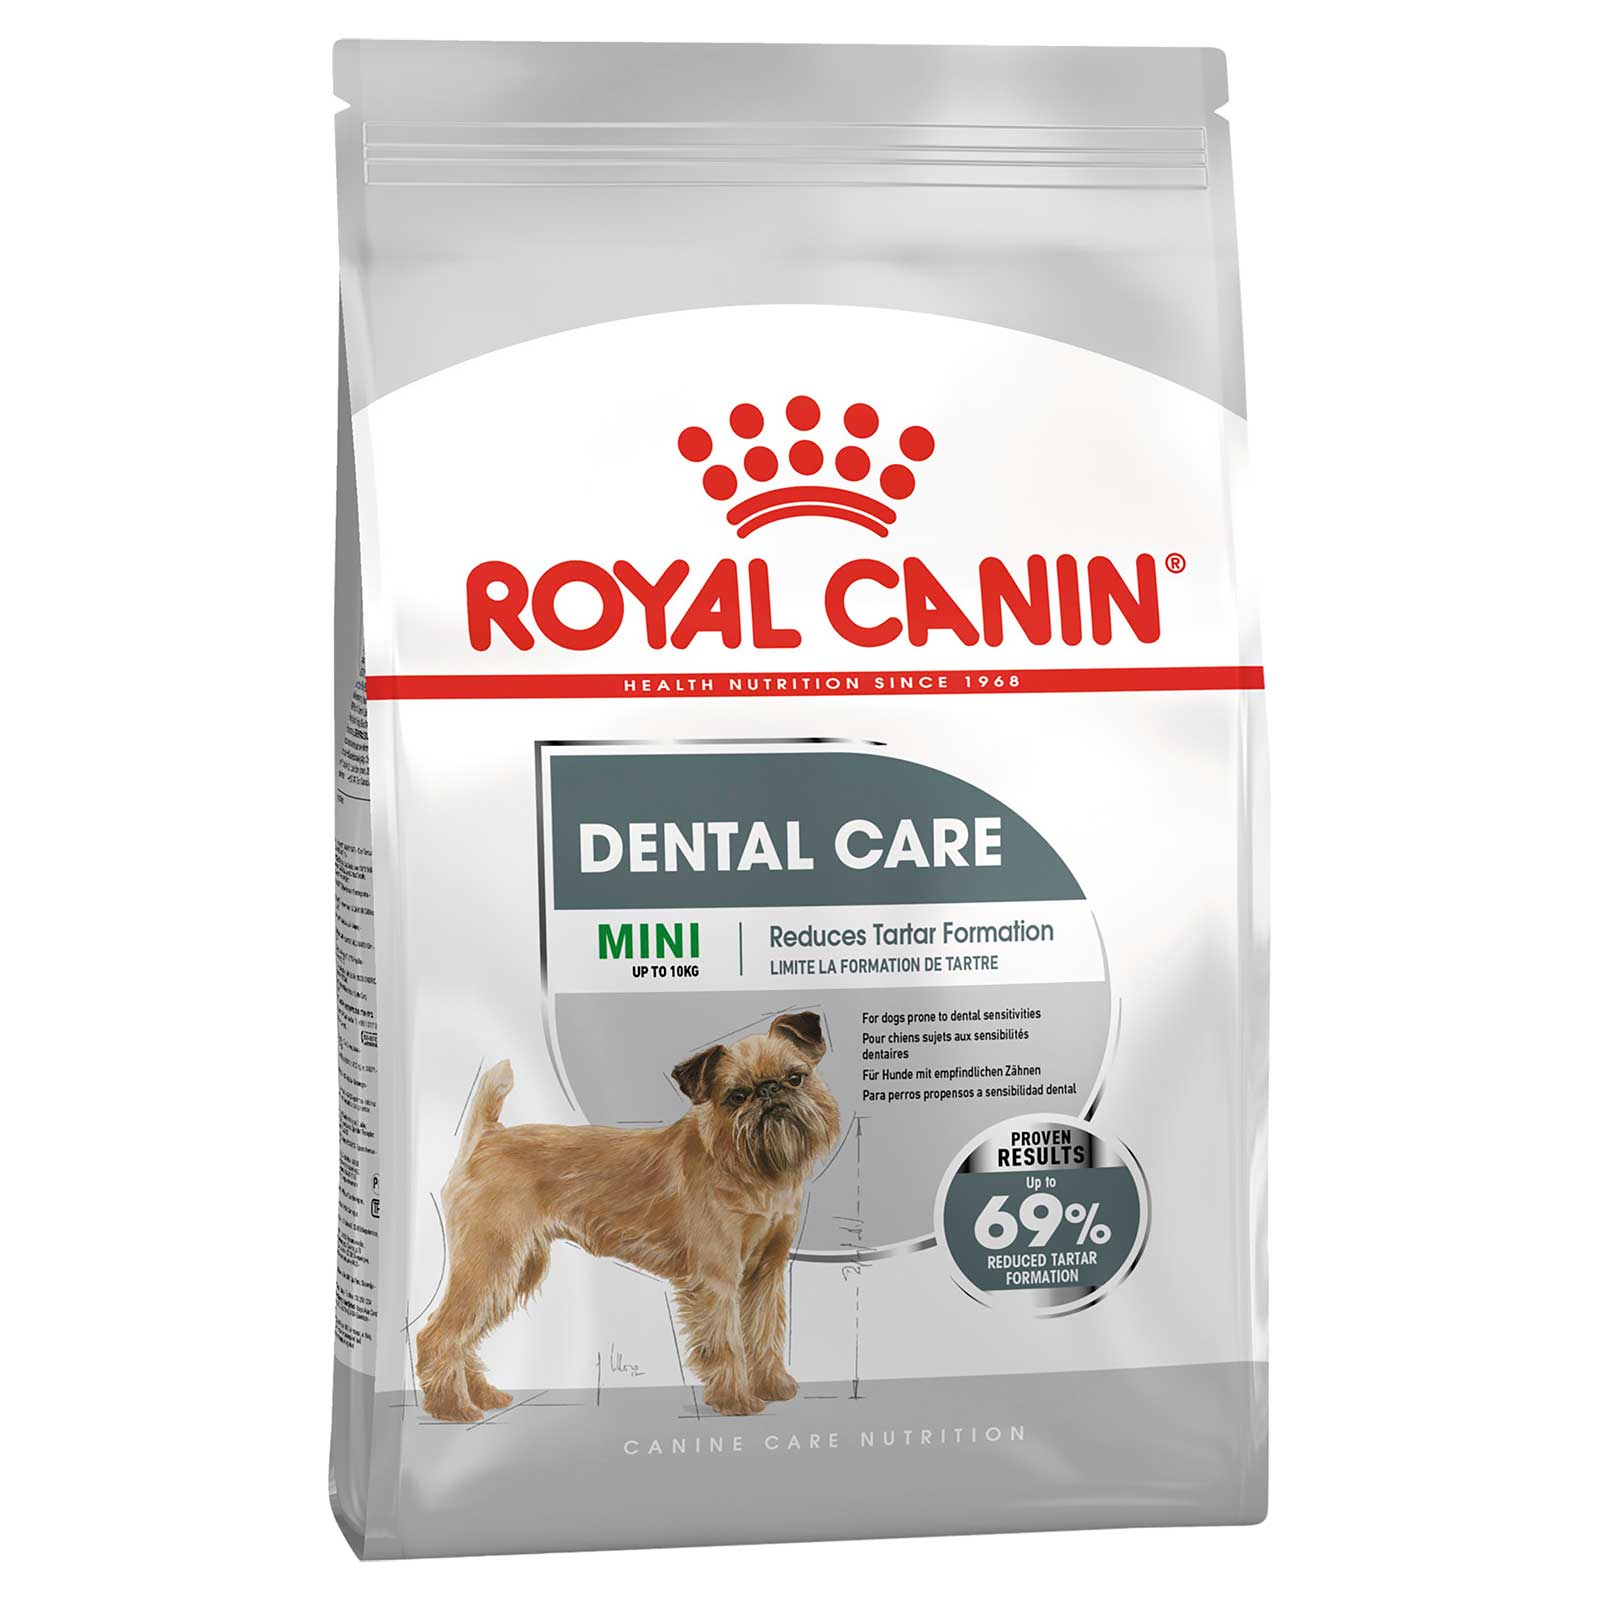 Royal Canin Dog Food Dental Care Mini